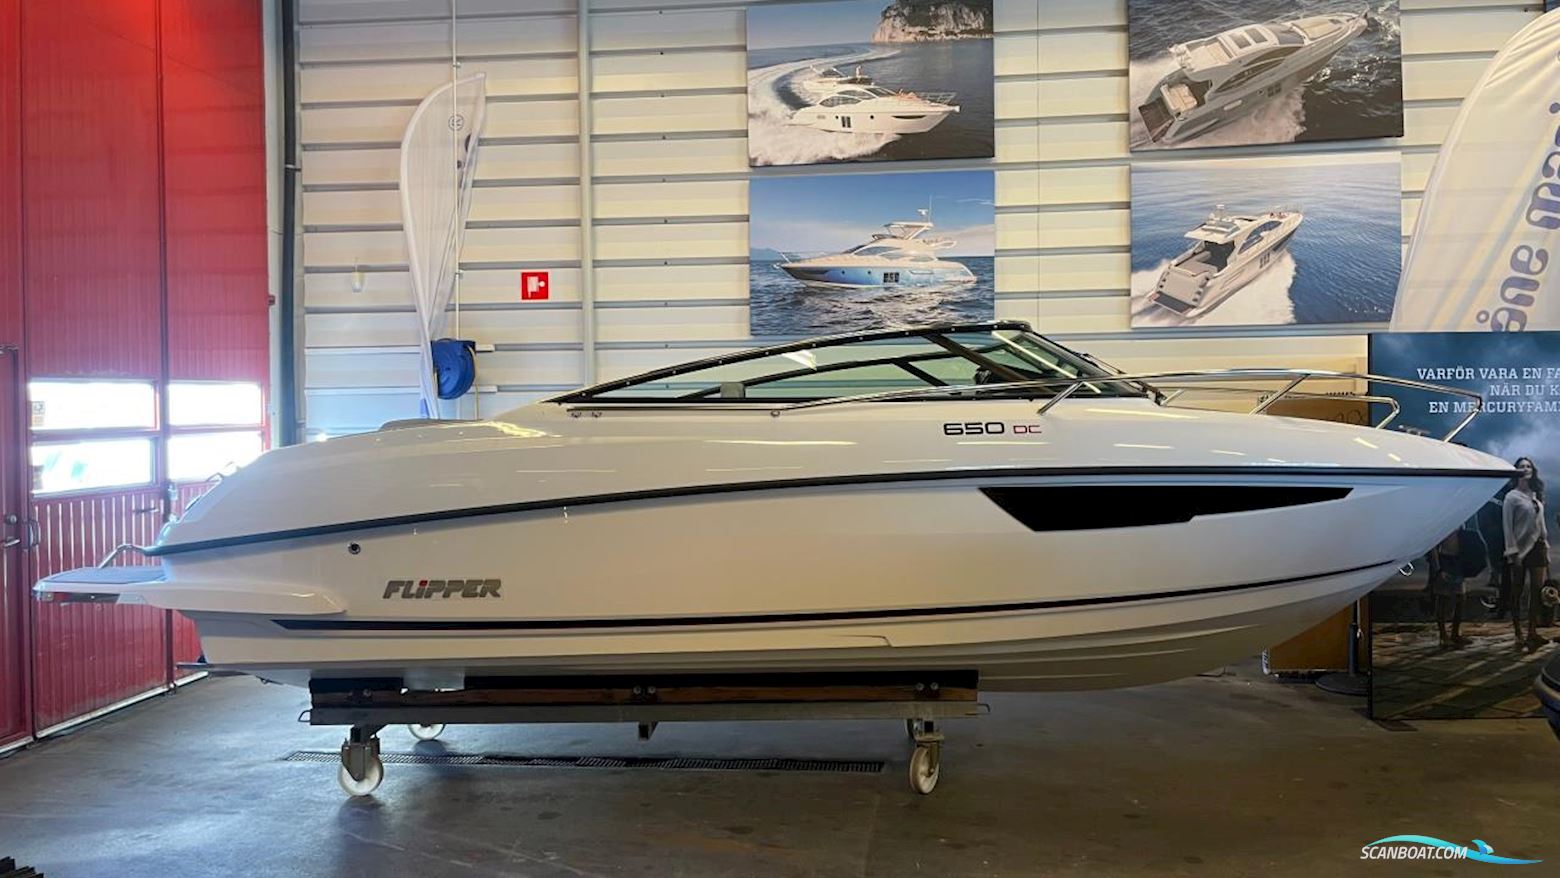 Flipper 650 DC Motor boat 2023, with Mercury engine, Sweden